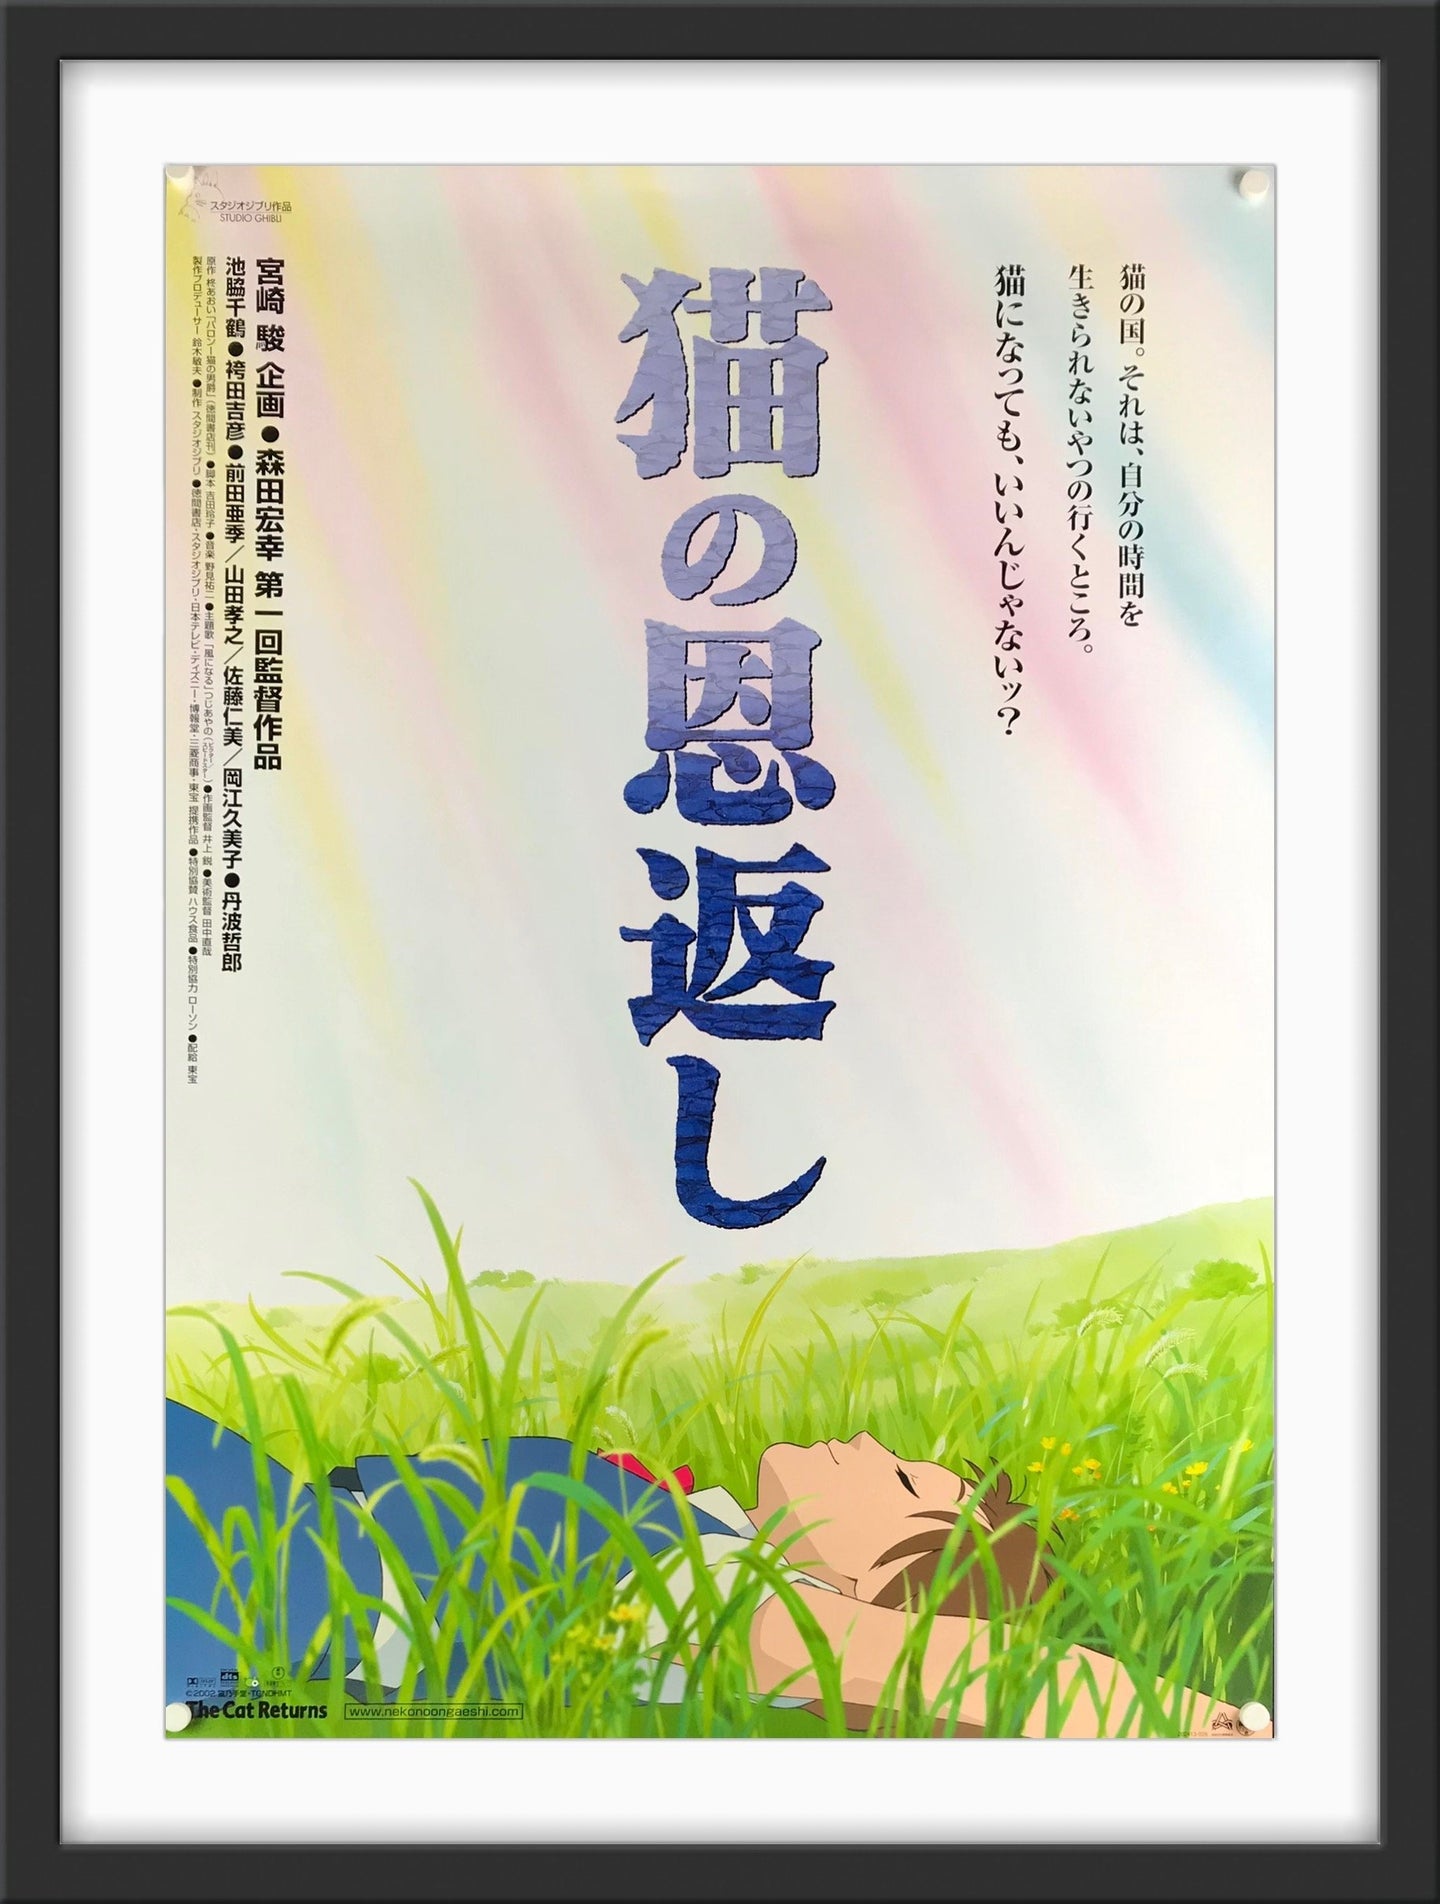 An original Japanese poster for the Studio Ghibli film The Cat Returns